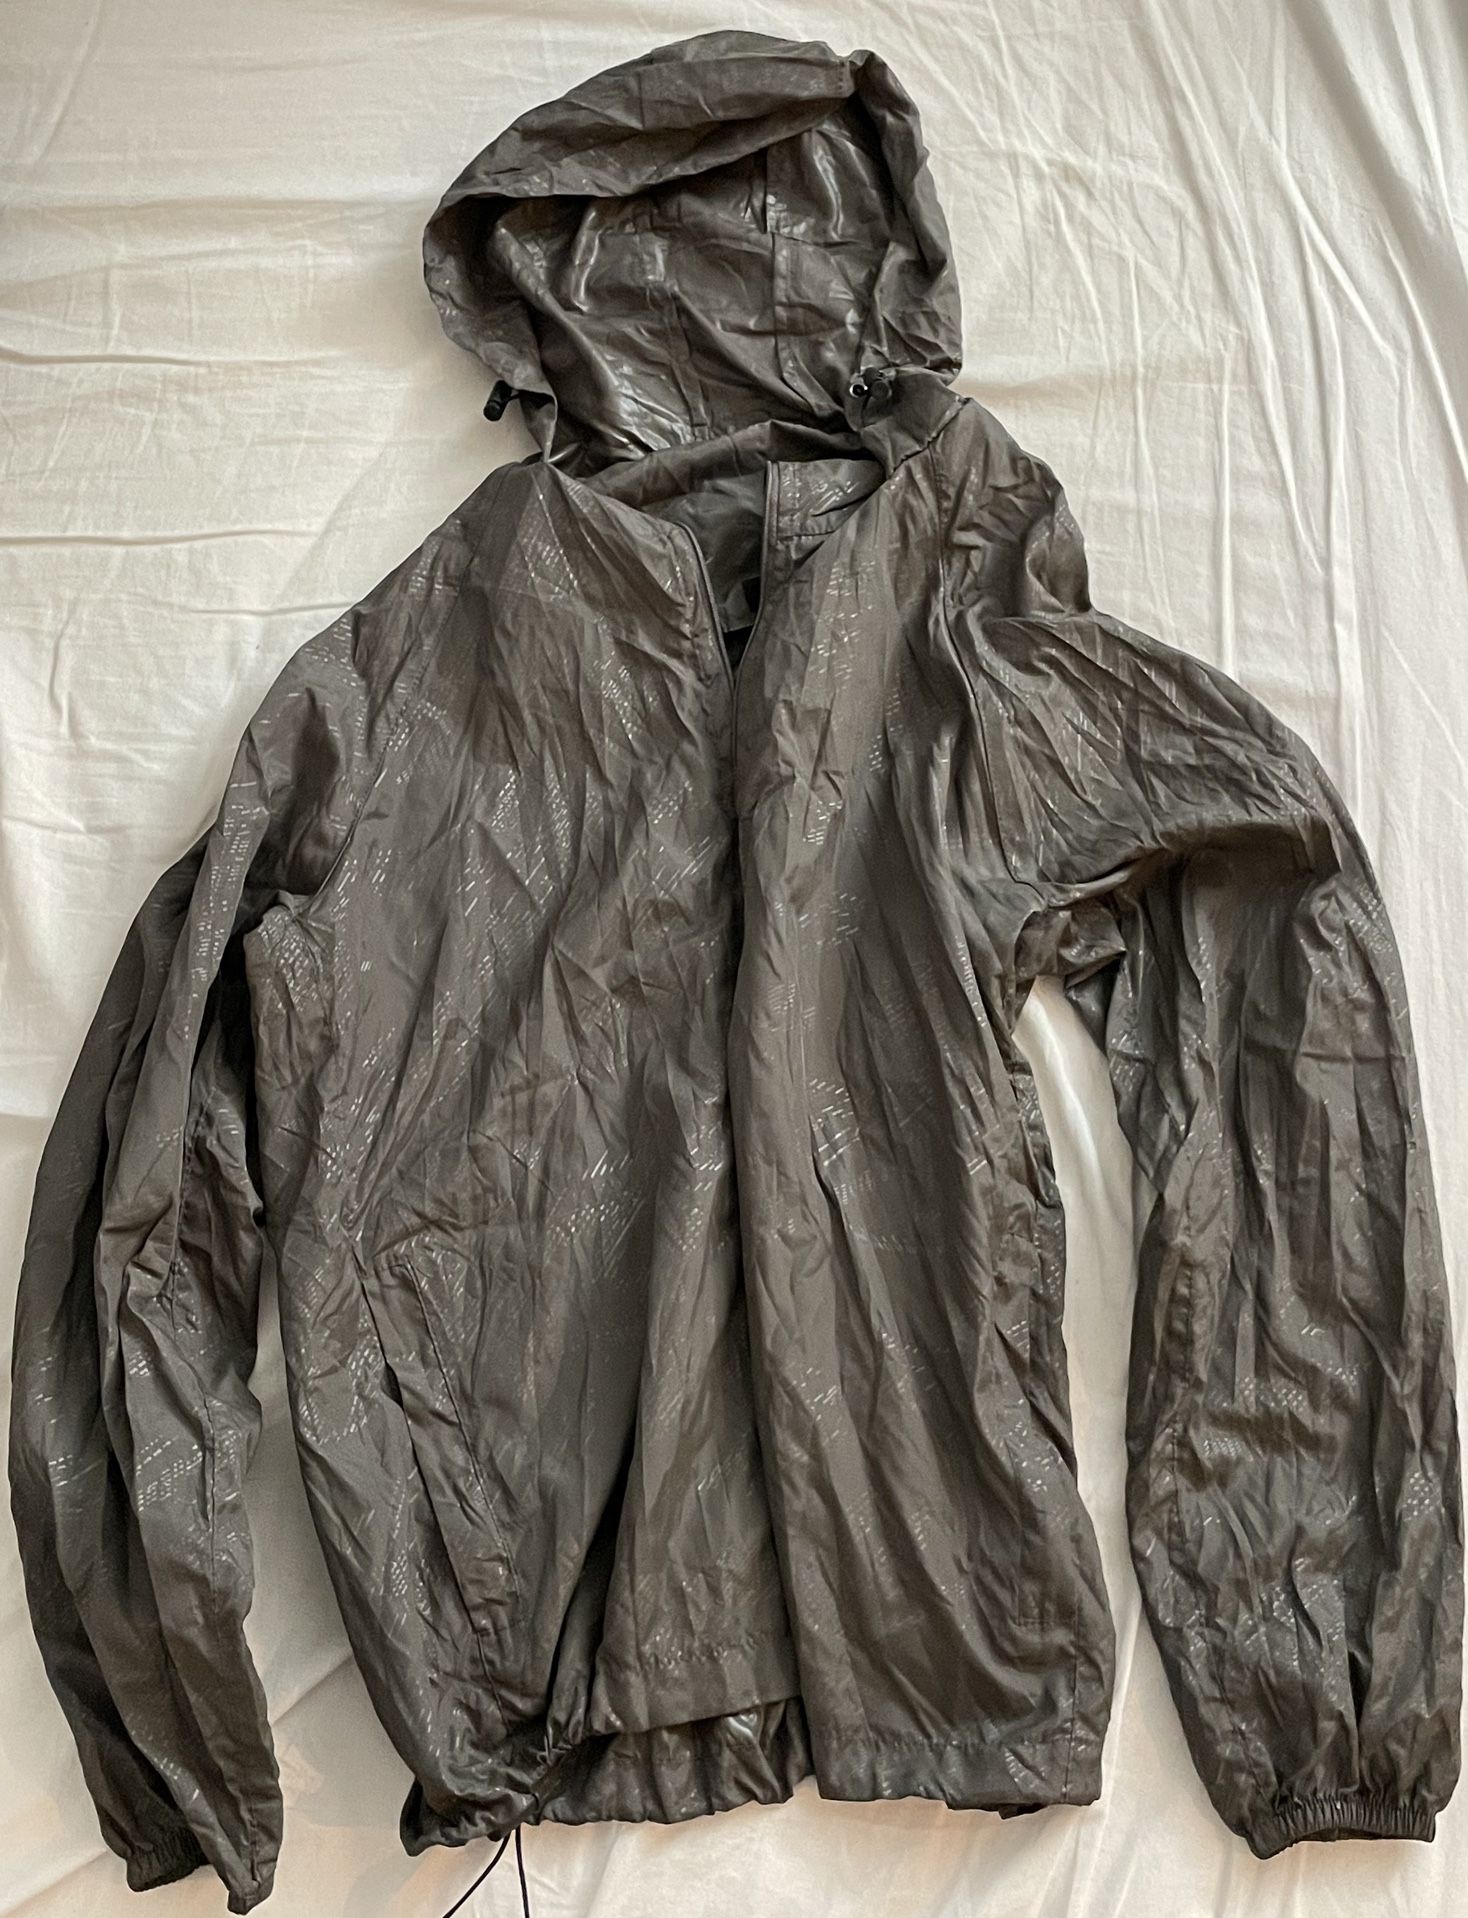 New / Never Worn lightweight waterproof jacket 